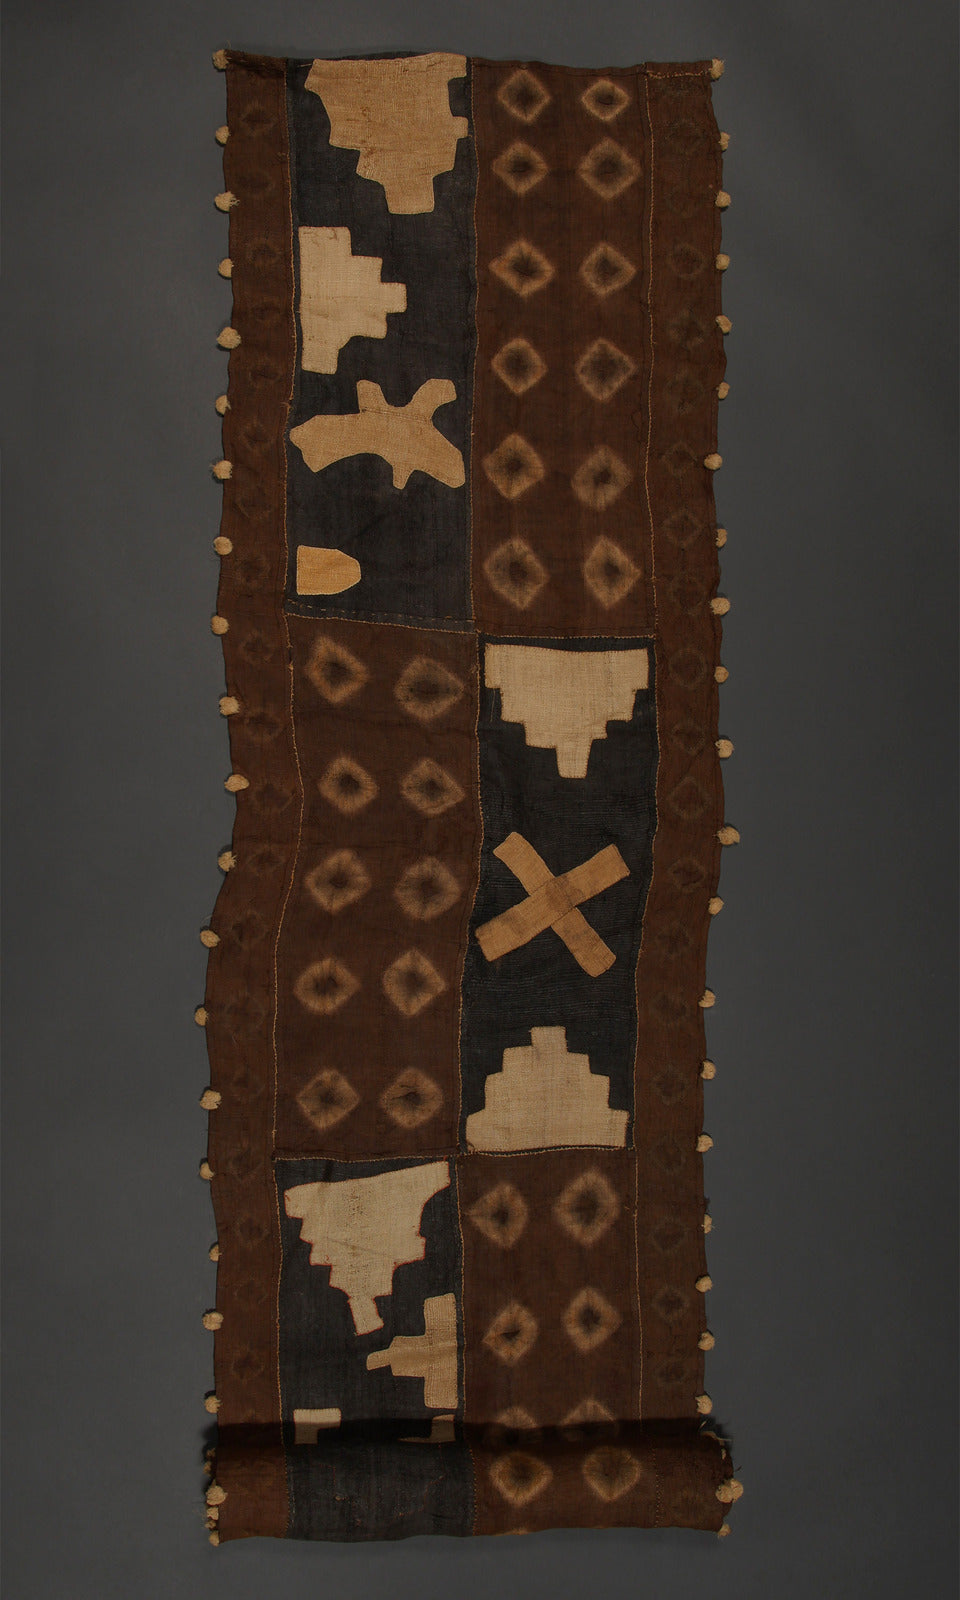 Kuba Textiles  Tribal Art - Textiles  Dance Skirt  D.R. Congo  Collectibles Textiles  African Textiles  African Art